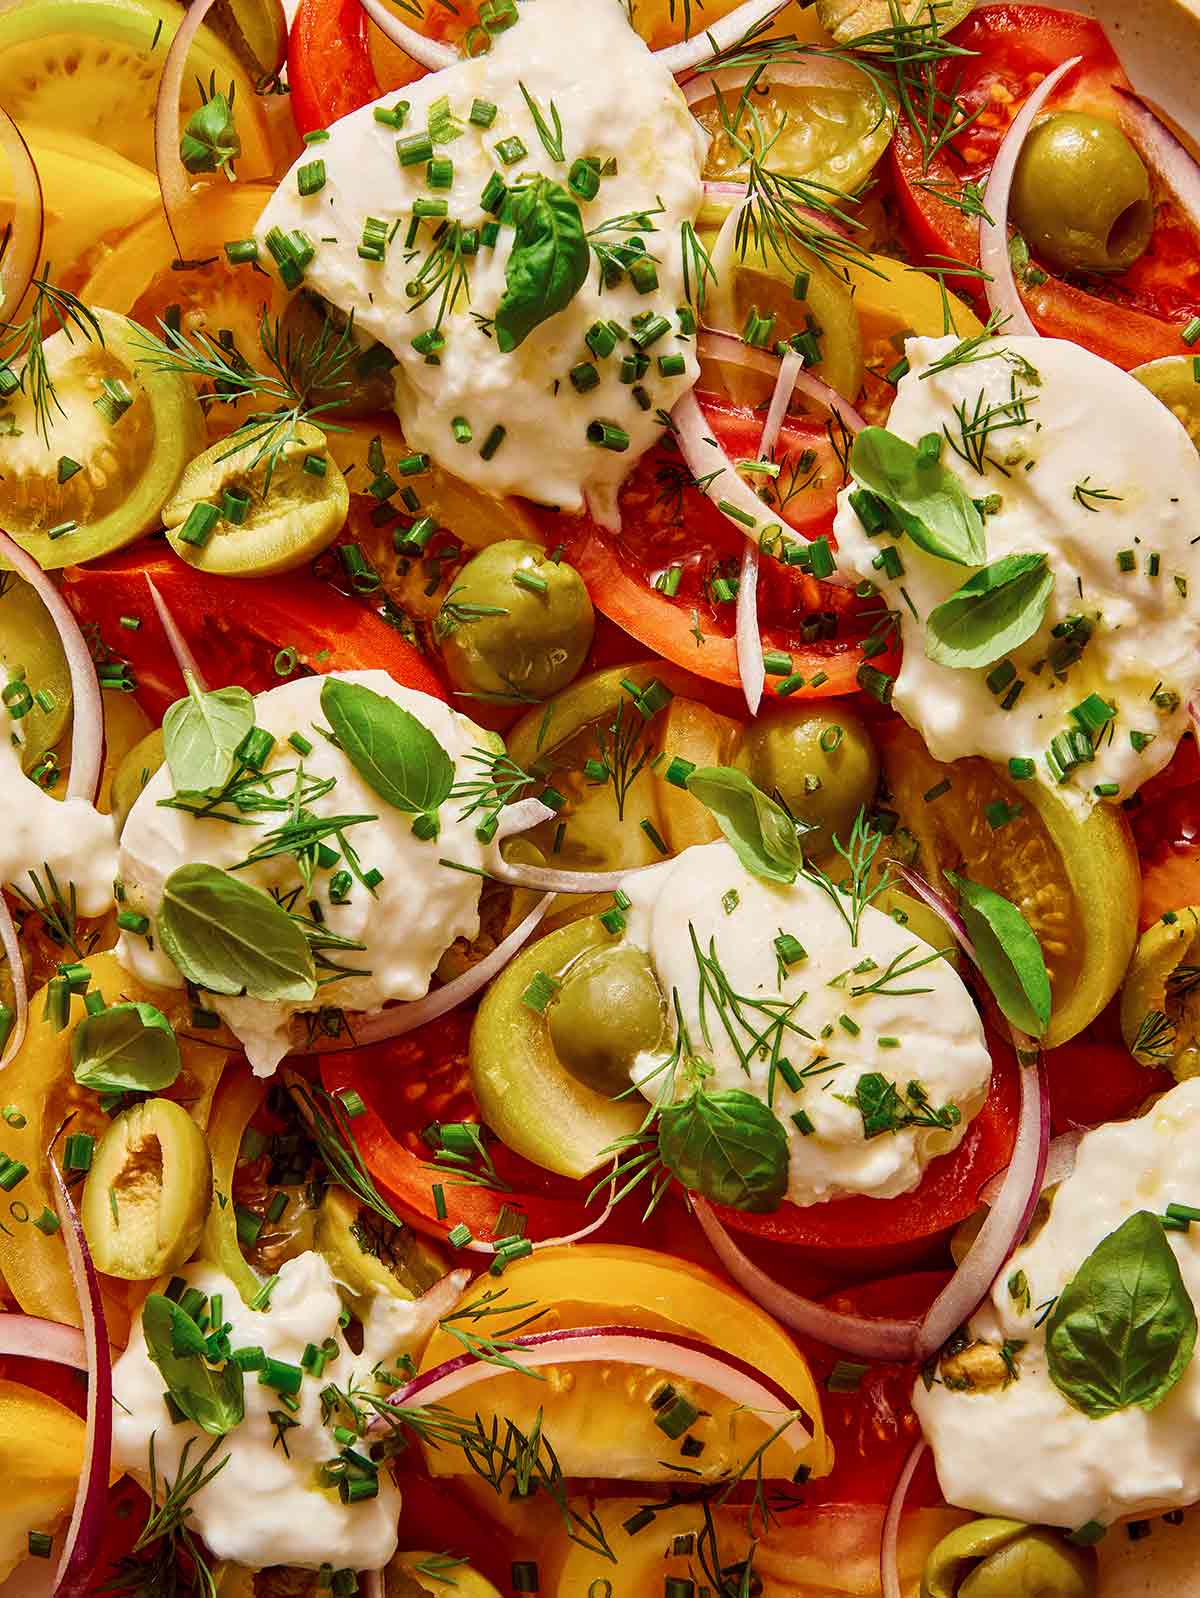 Tomato salad recipe up close. 